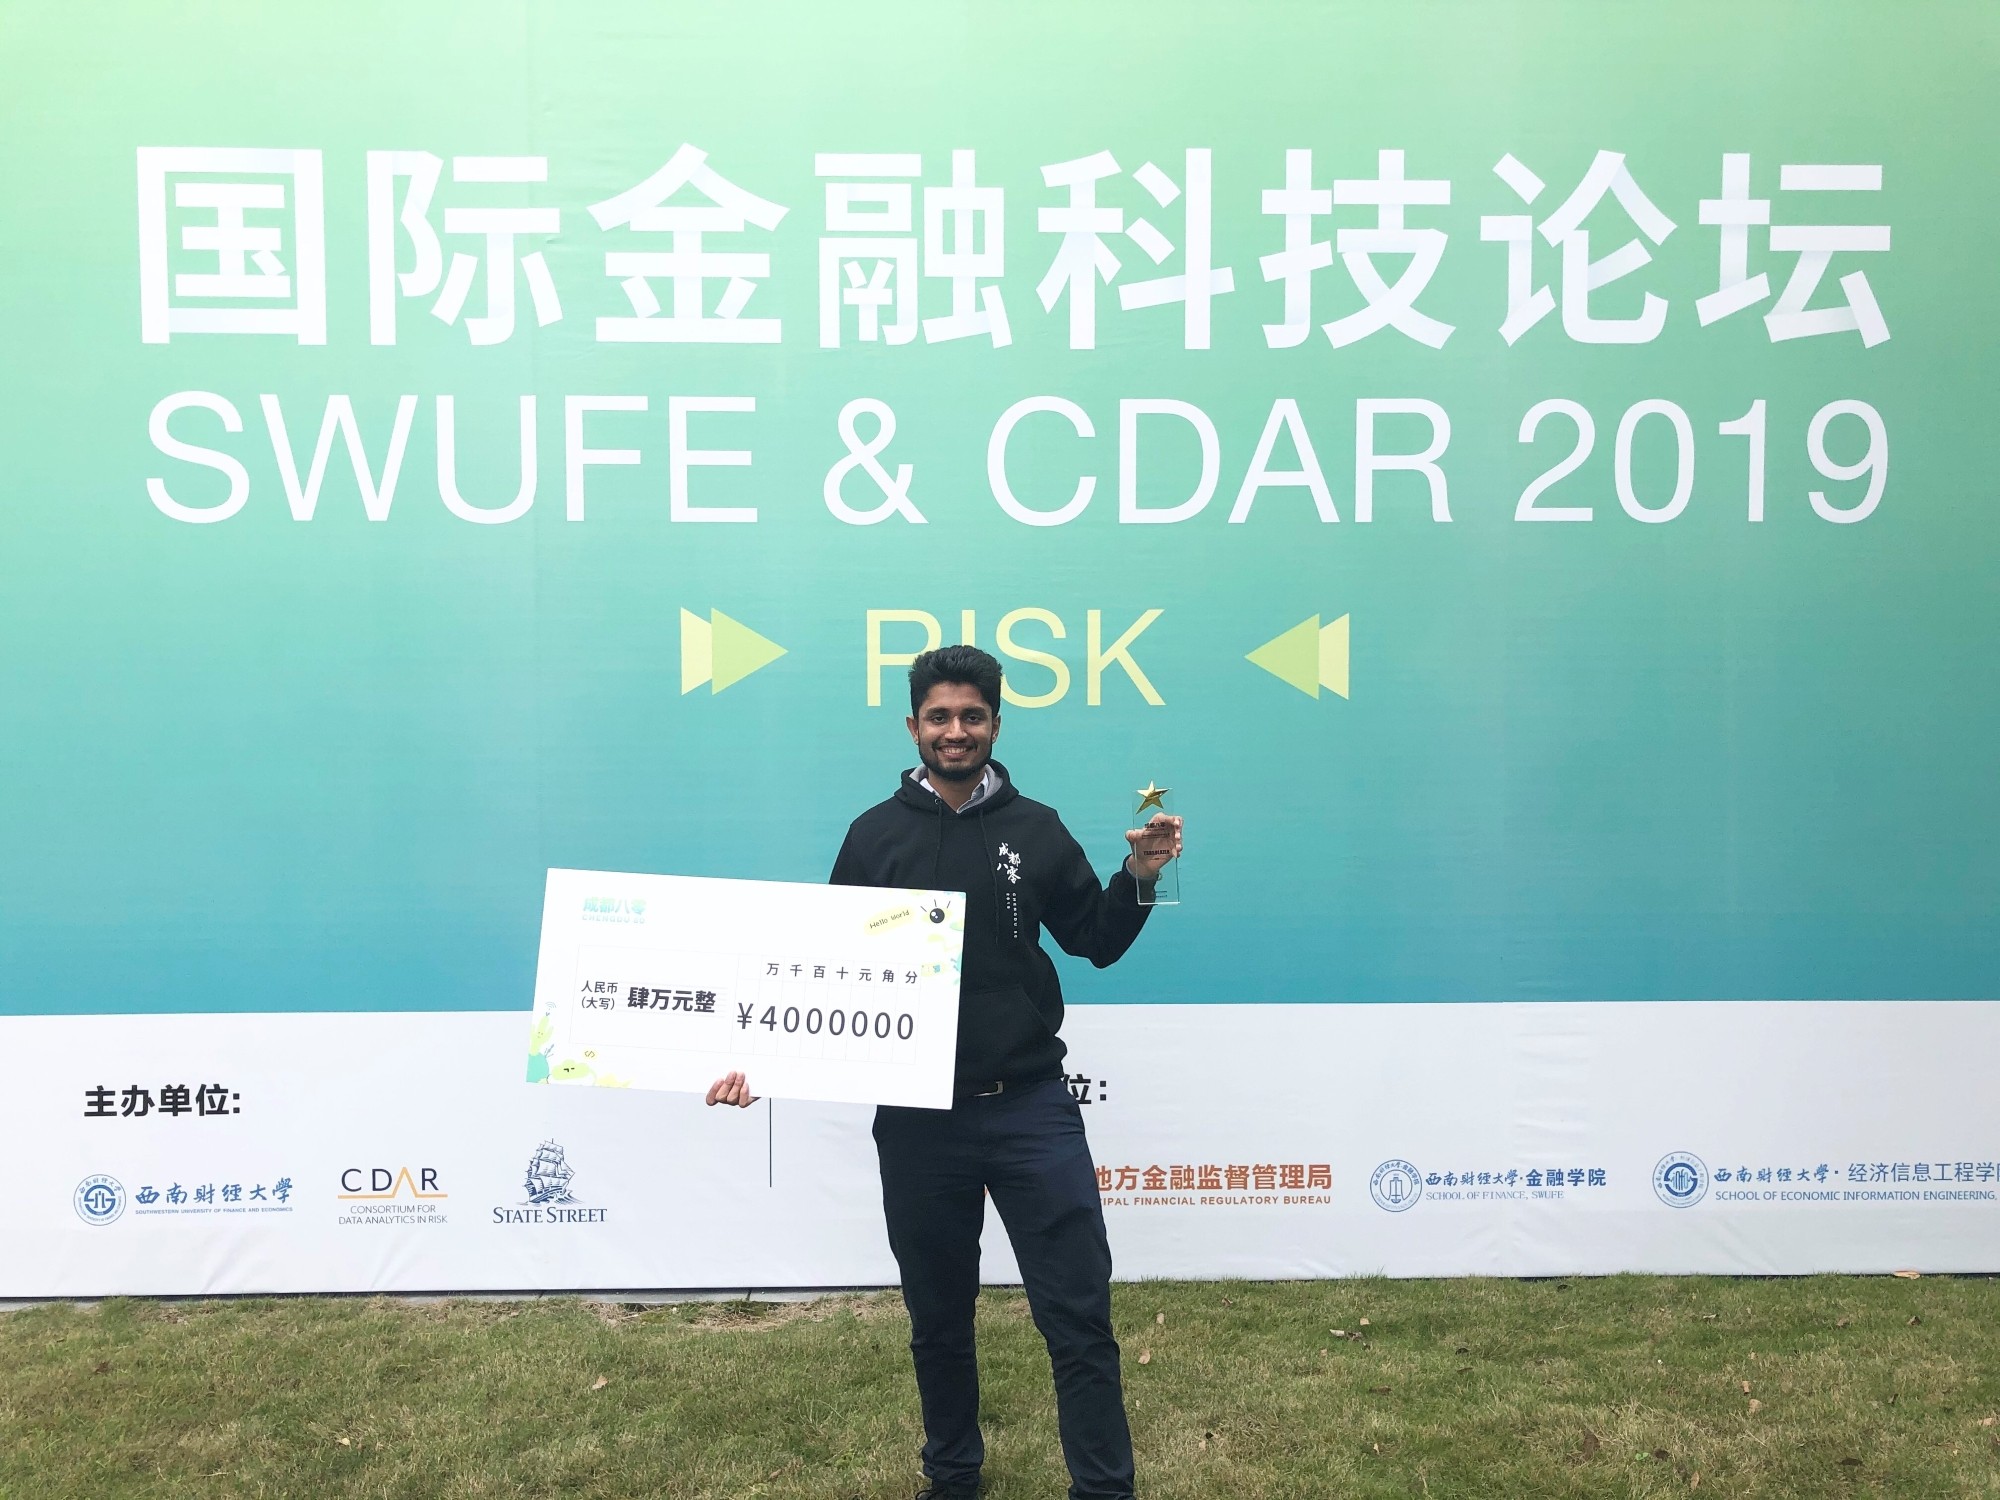 Photo of Piyush receving the award of SWUFE & CDAR 2019